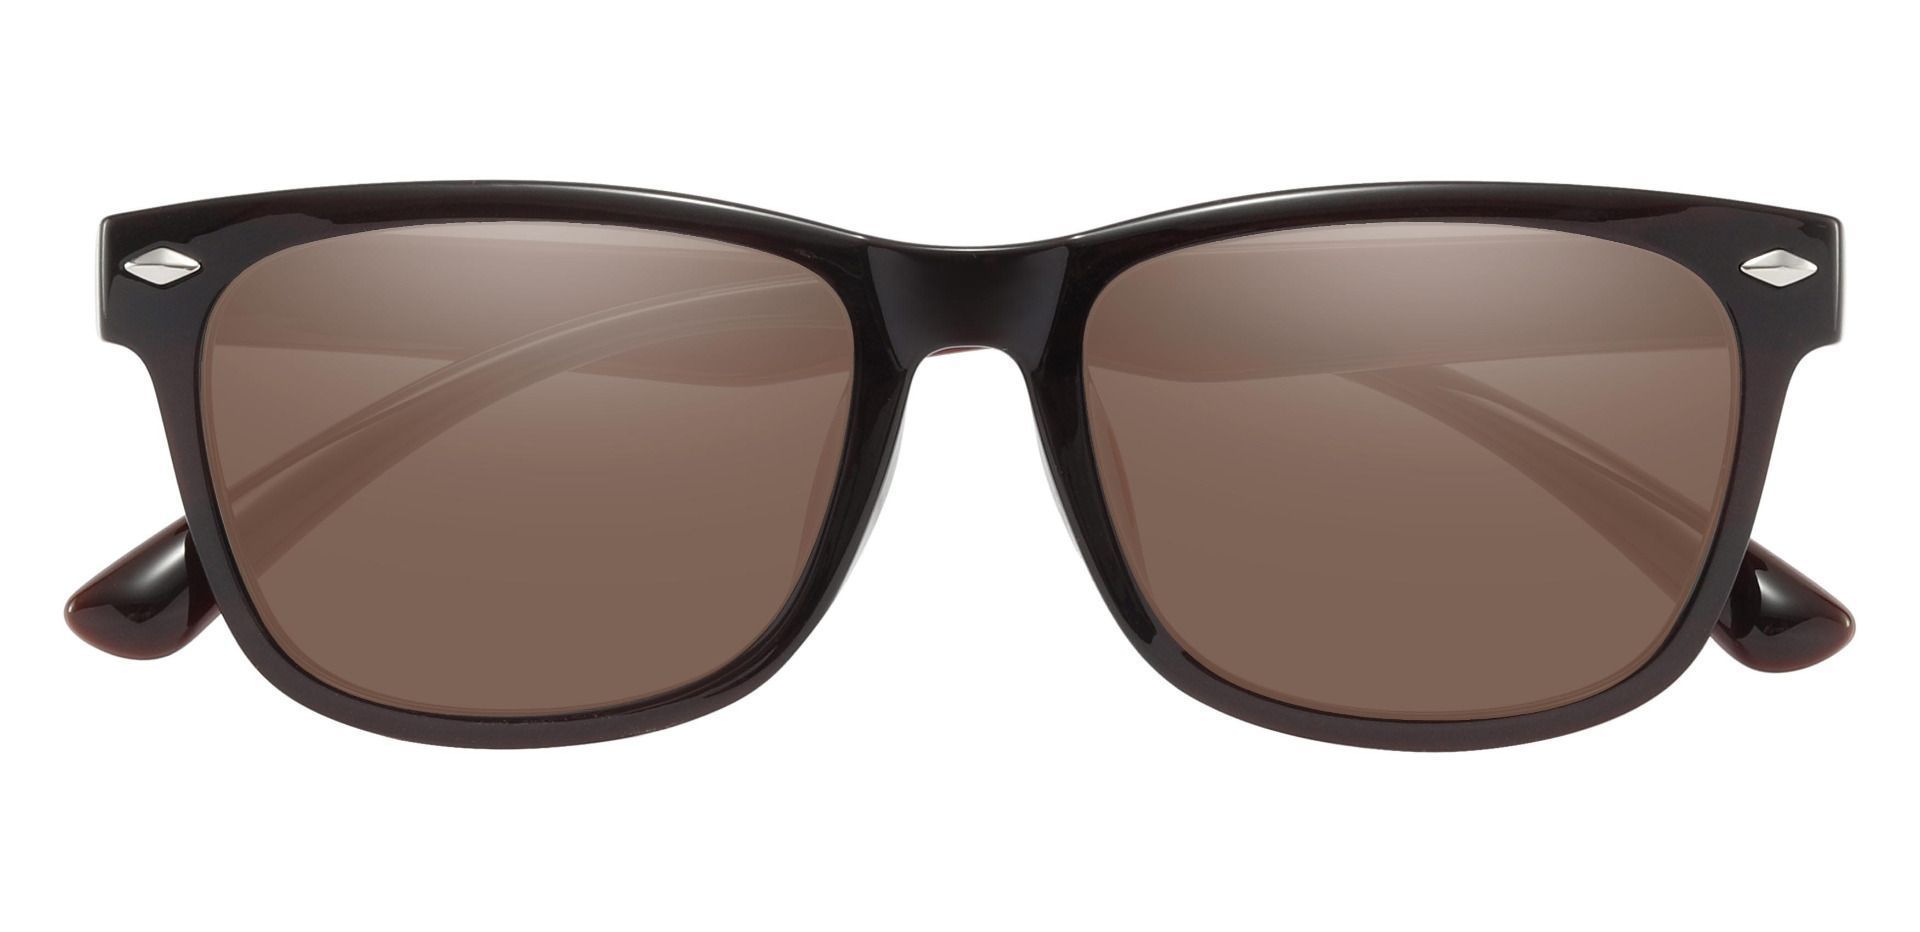 Shaler Square Progressive Sunglasses - Red Frame With Brown Lenses